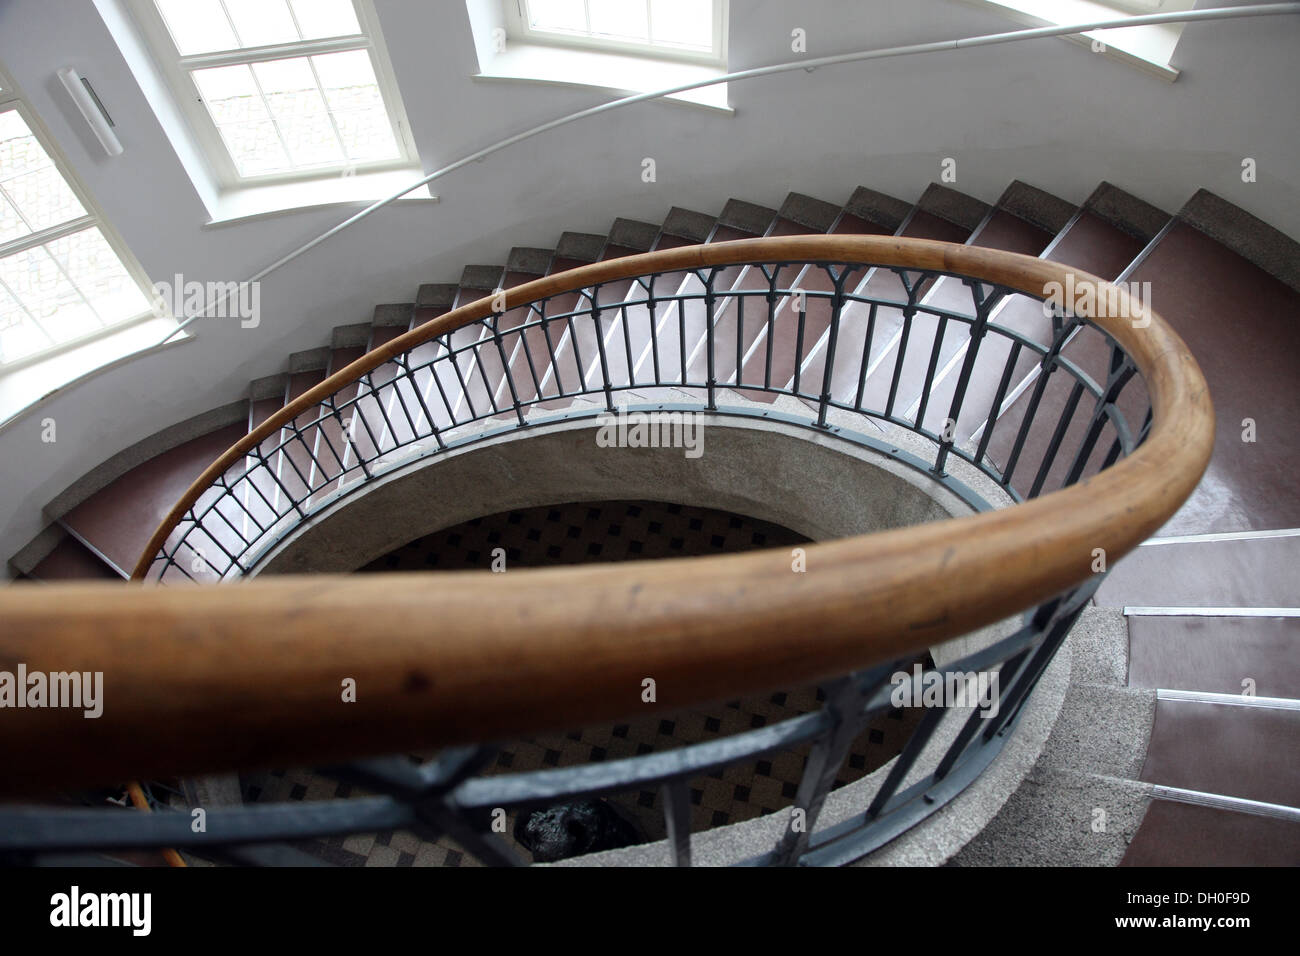 The staircase in Bauhaus University, the original Bauhaus School designed by architect Henry van de Velde Stock Photo